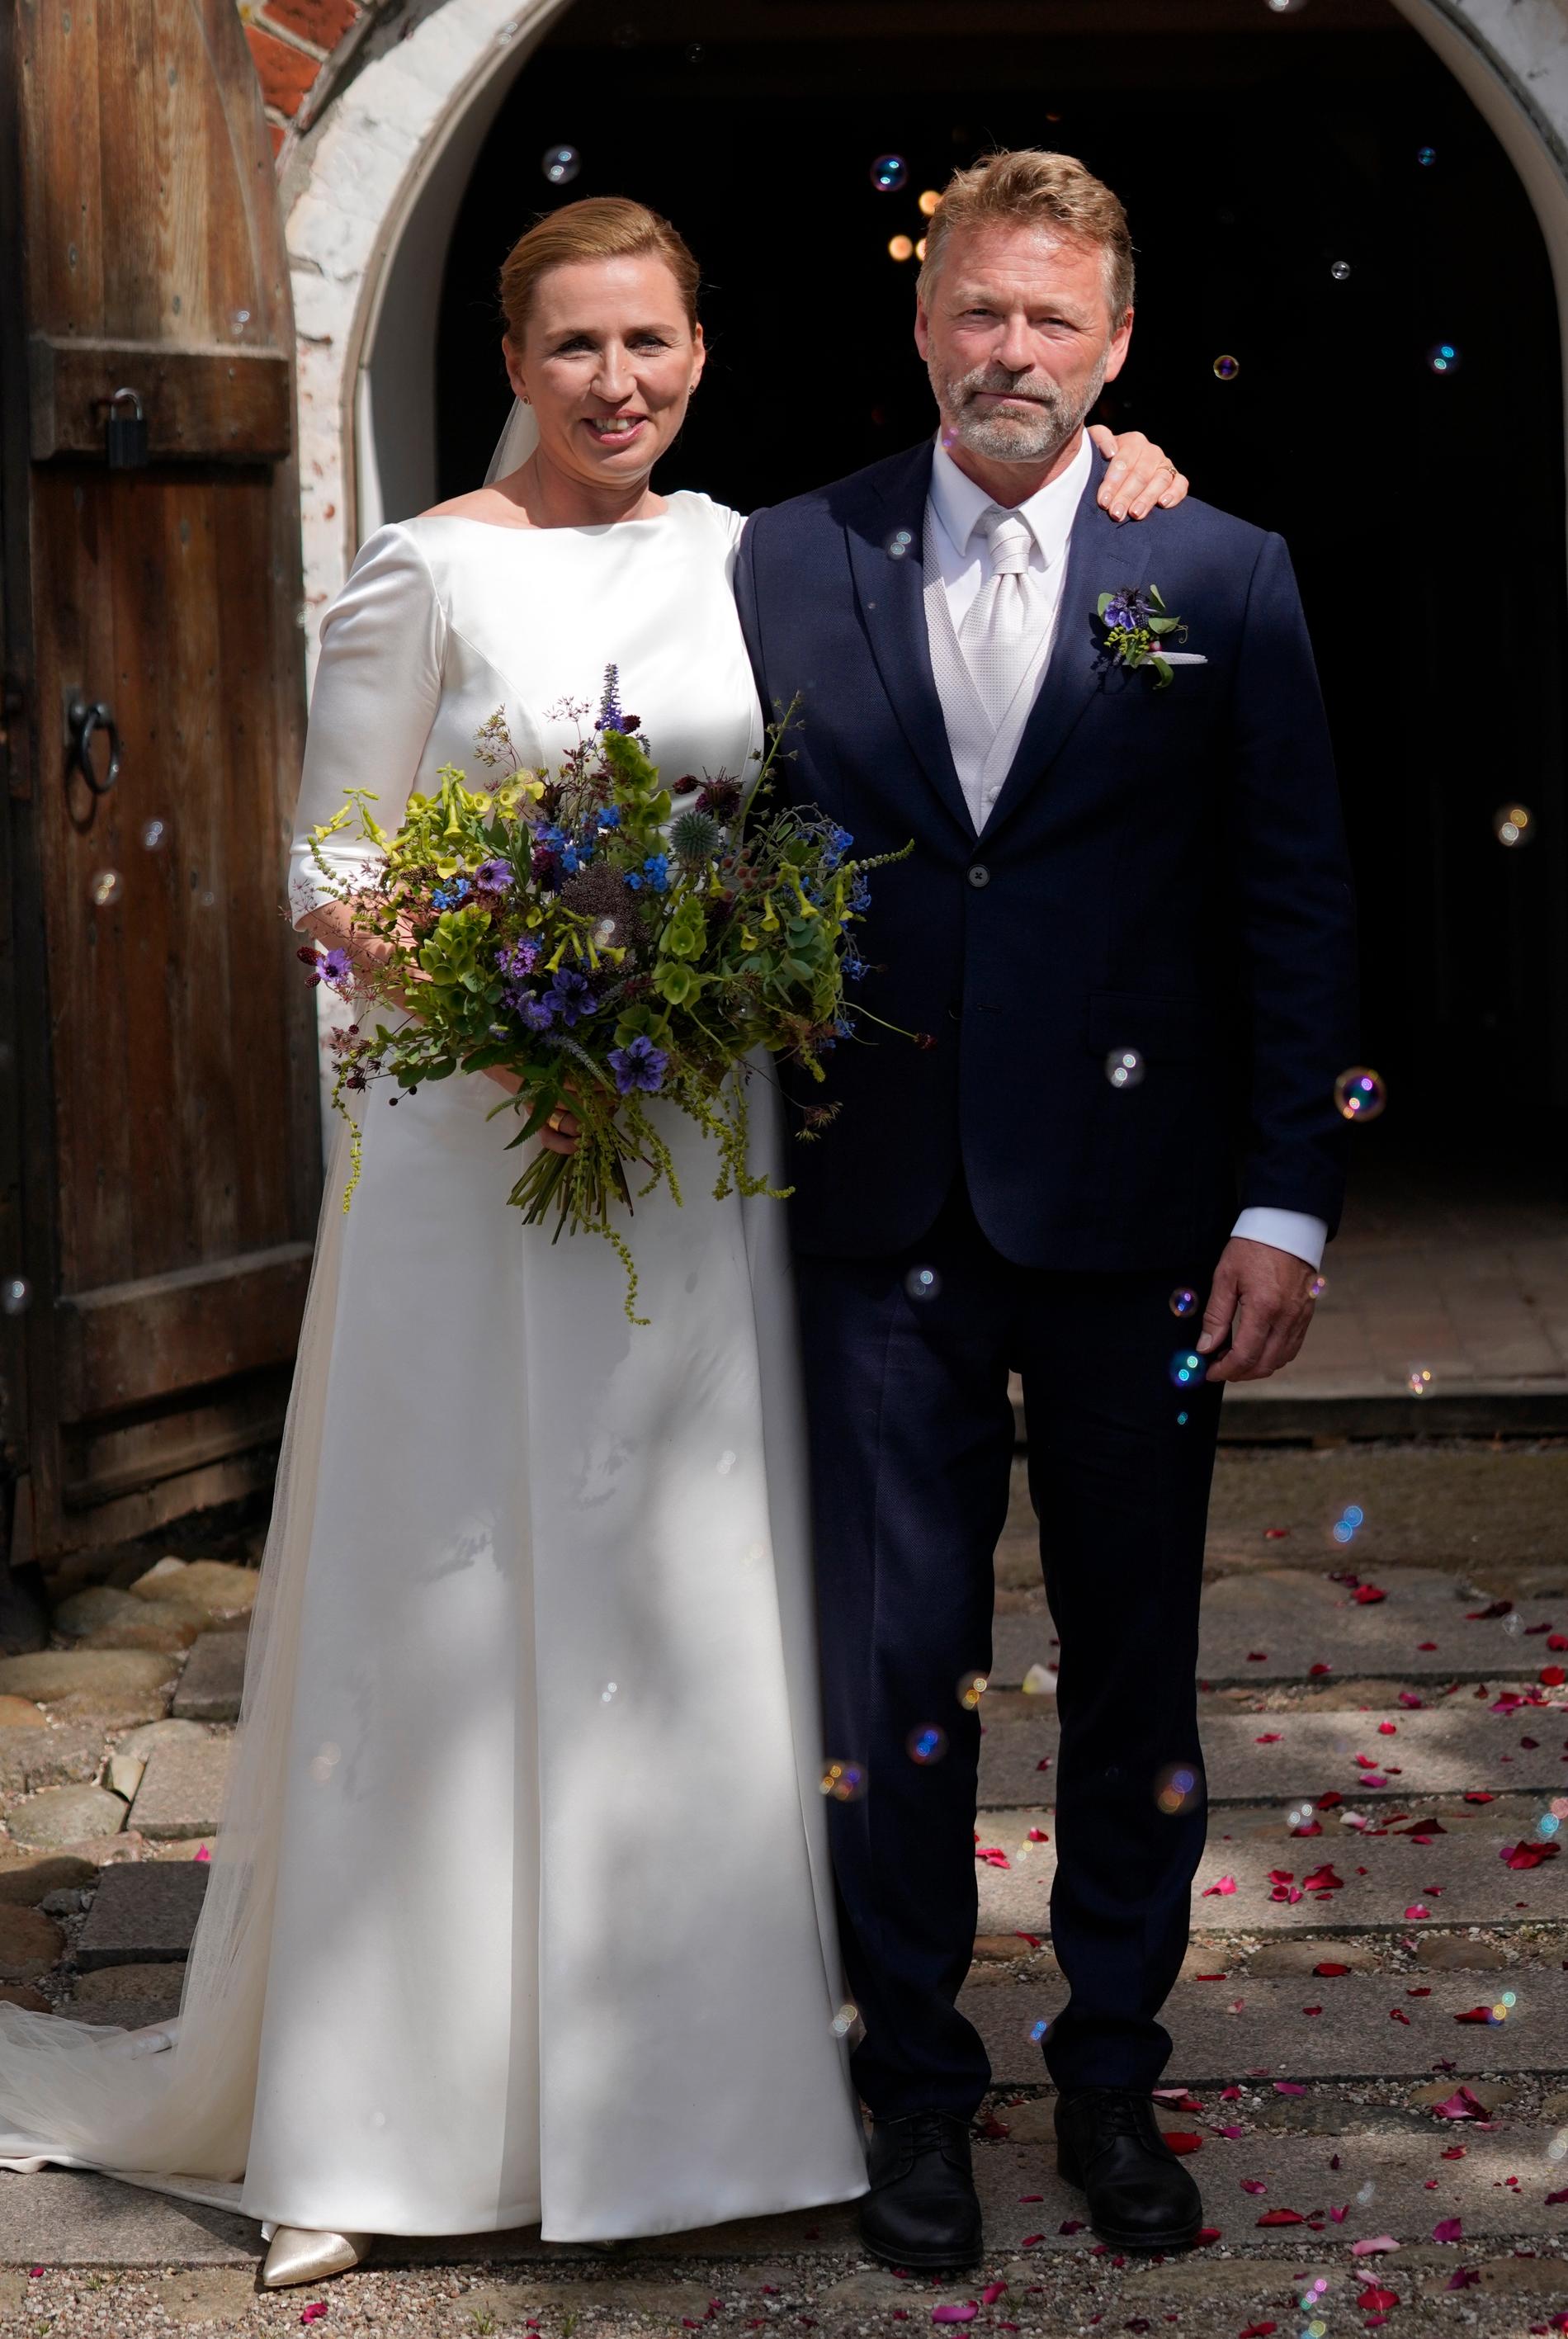 Danmarks statsminister Mette Frederiksen har gift sig med fotograf Bo Tengberg i Magleby kyrka.